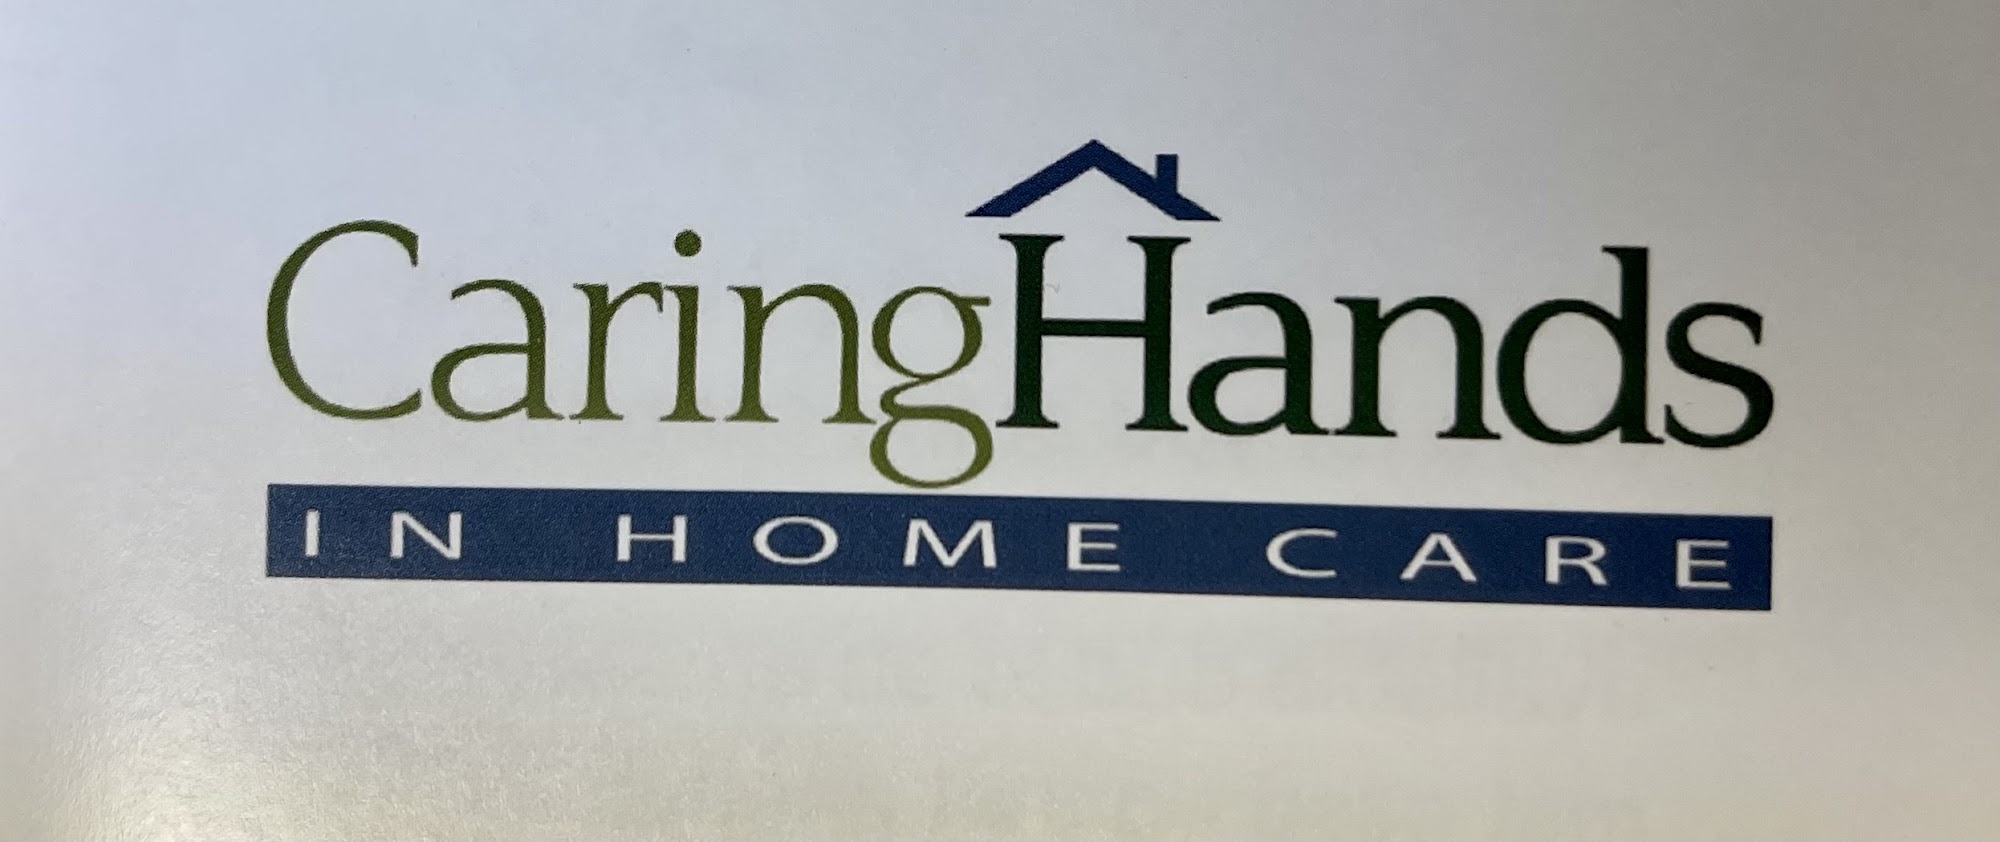 Caring Hands In Home Care, LLC 16287 US-61, Matthews Missouri 63867